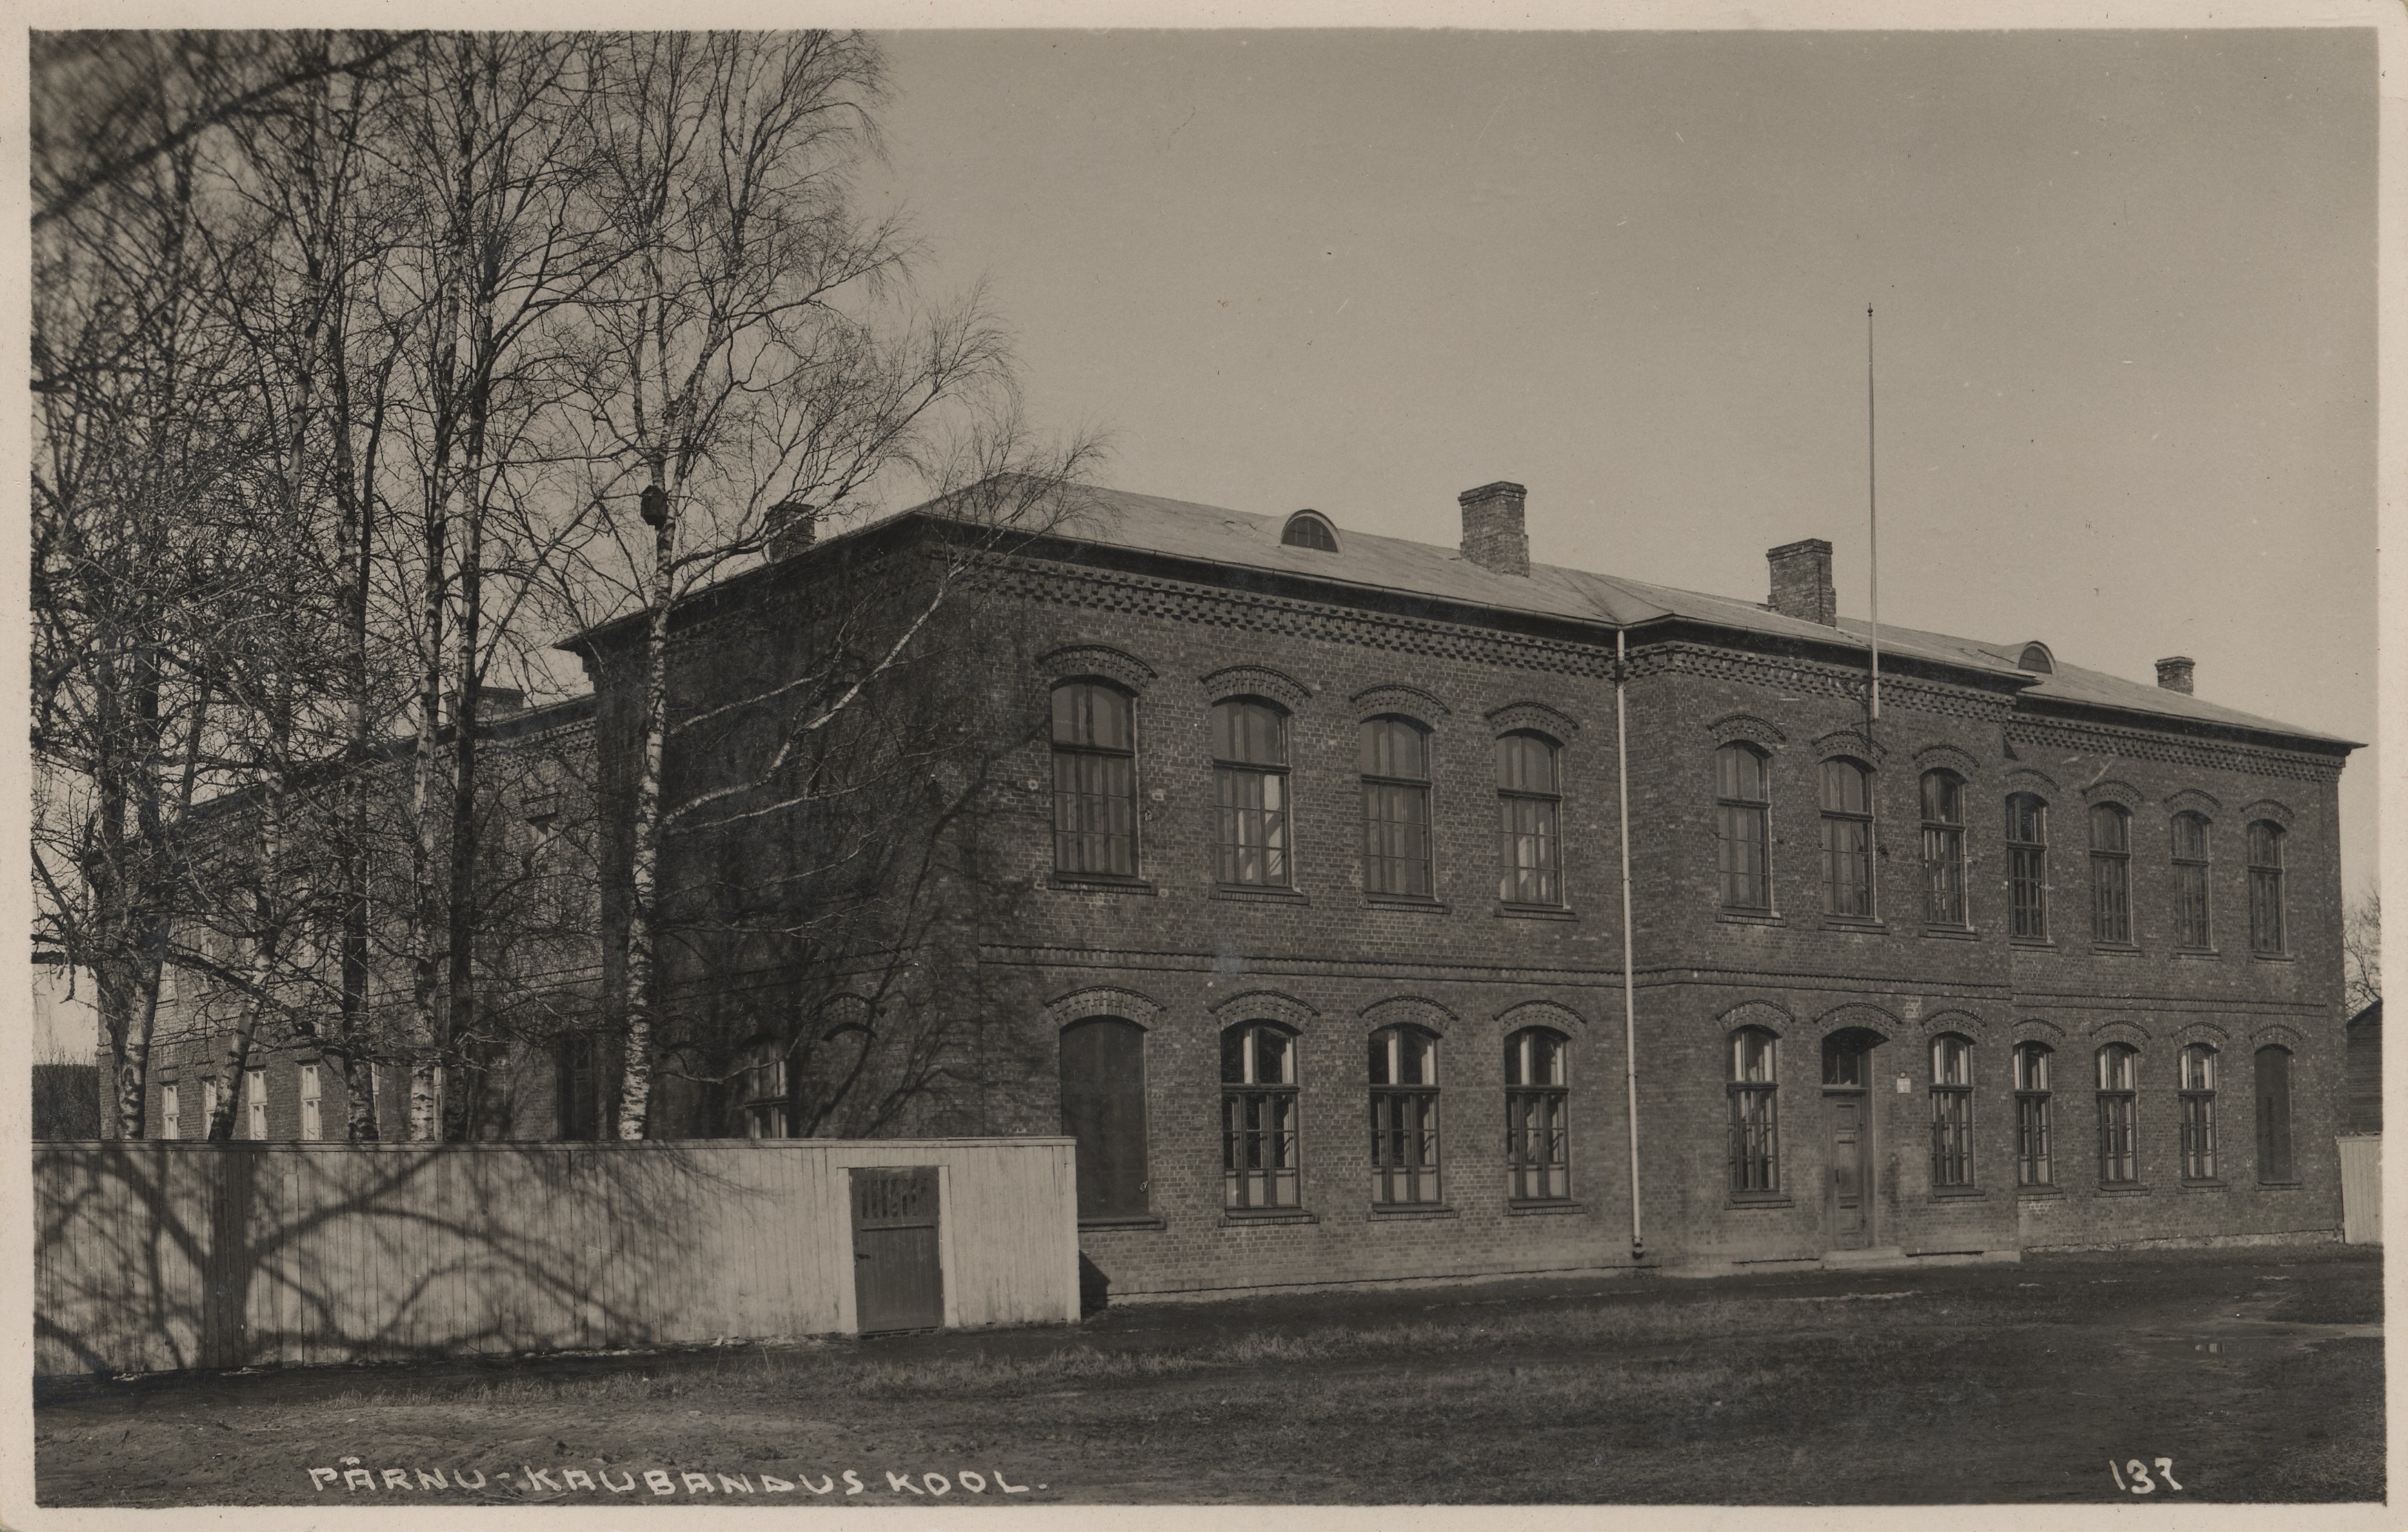 Pärnu School of Commerce